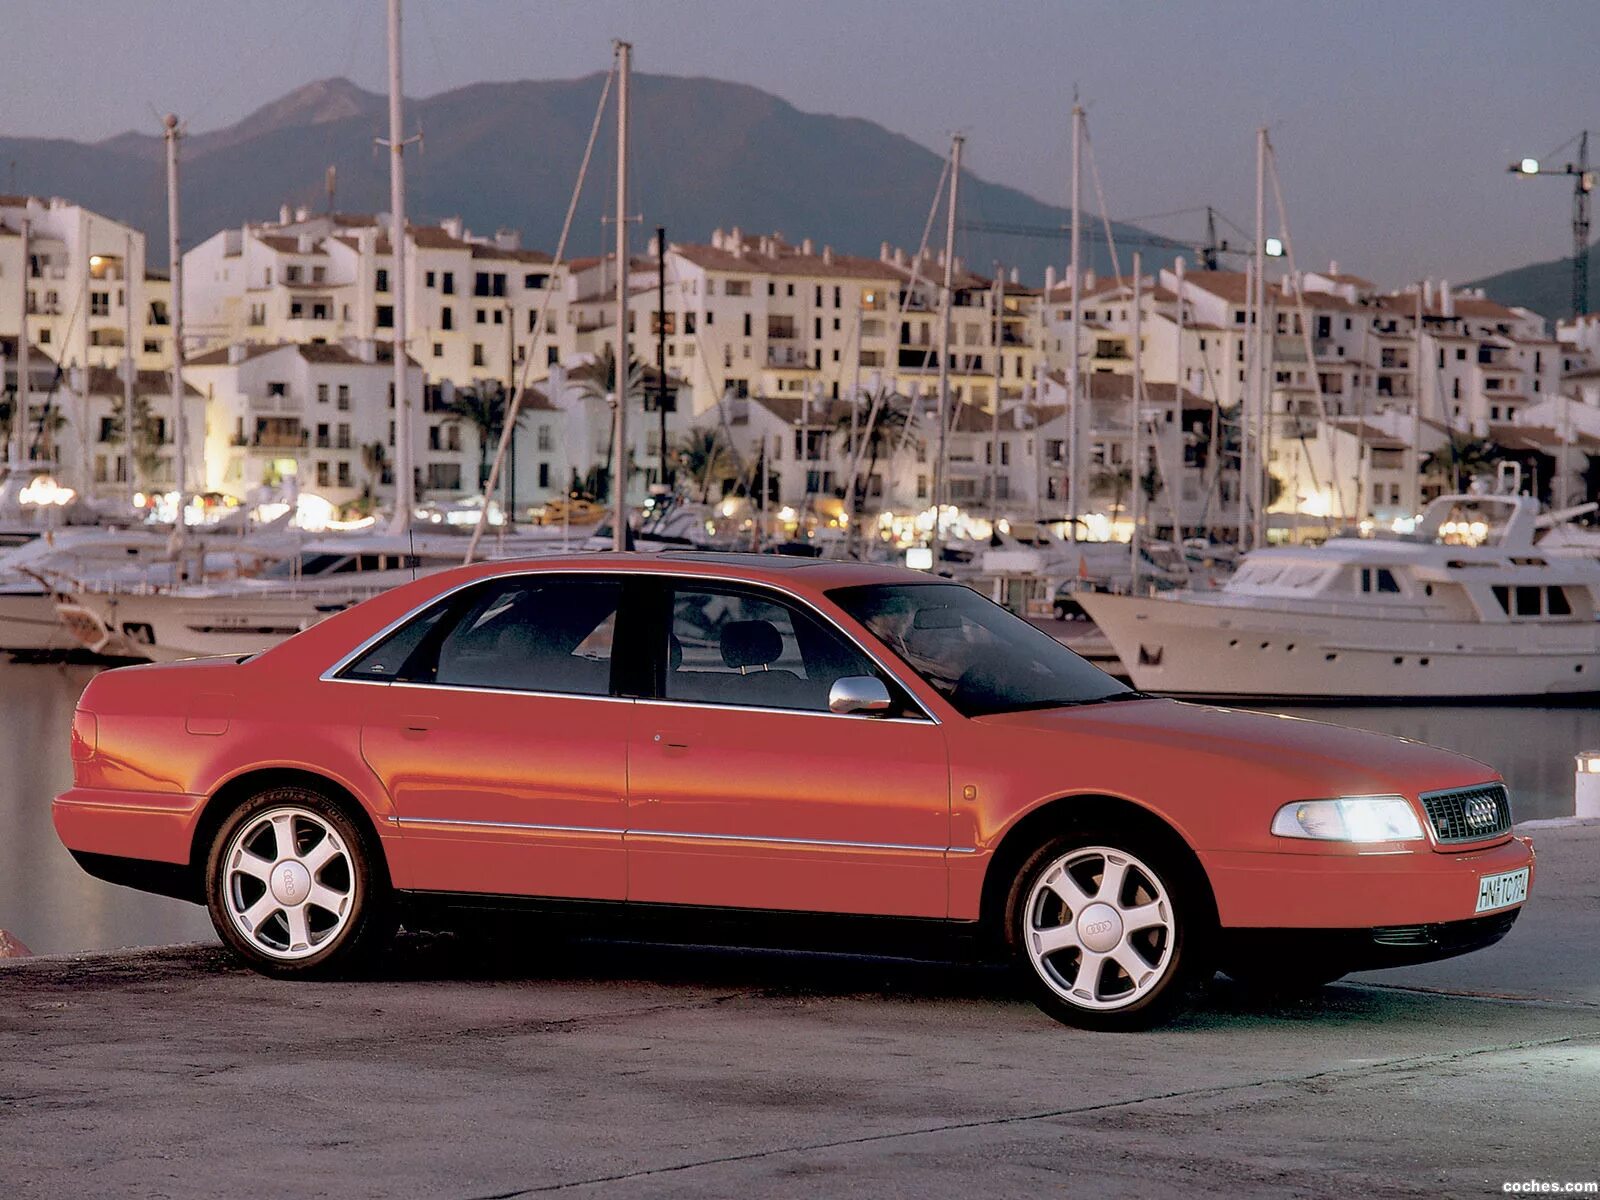 Купить ауди 1999. Audi s8 1996. Audi s8 d2 1996. Ауди s8 d2. Audi s8 d2 1998.